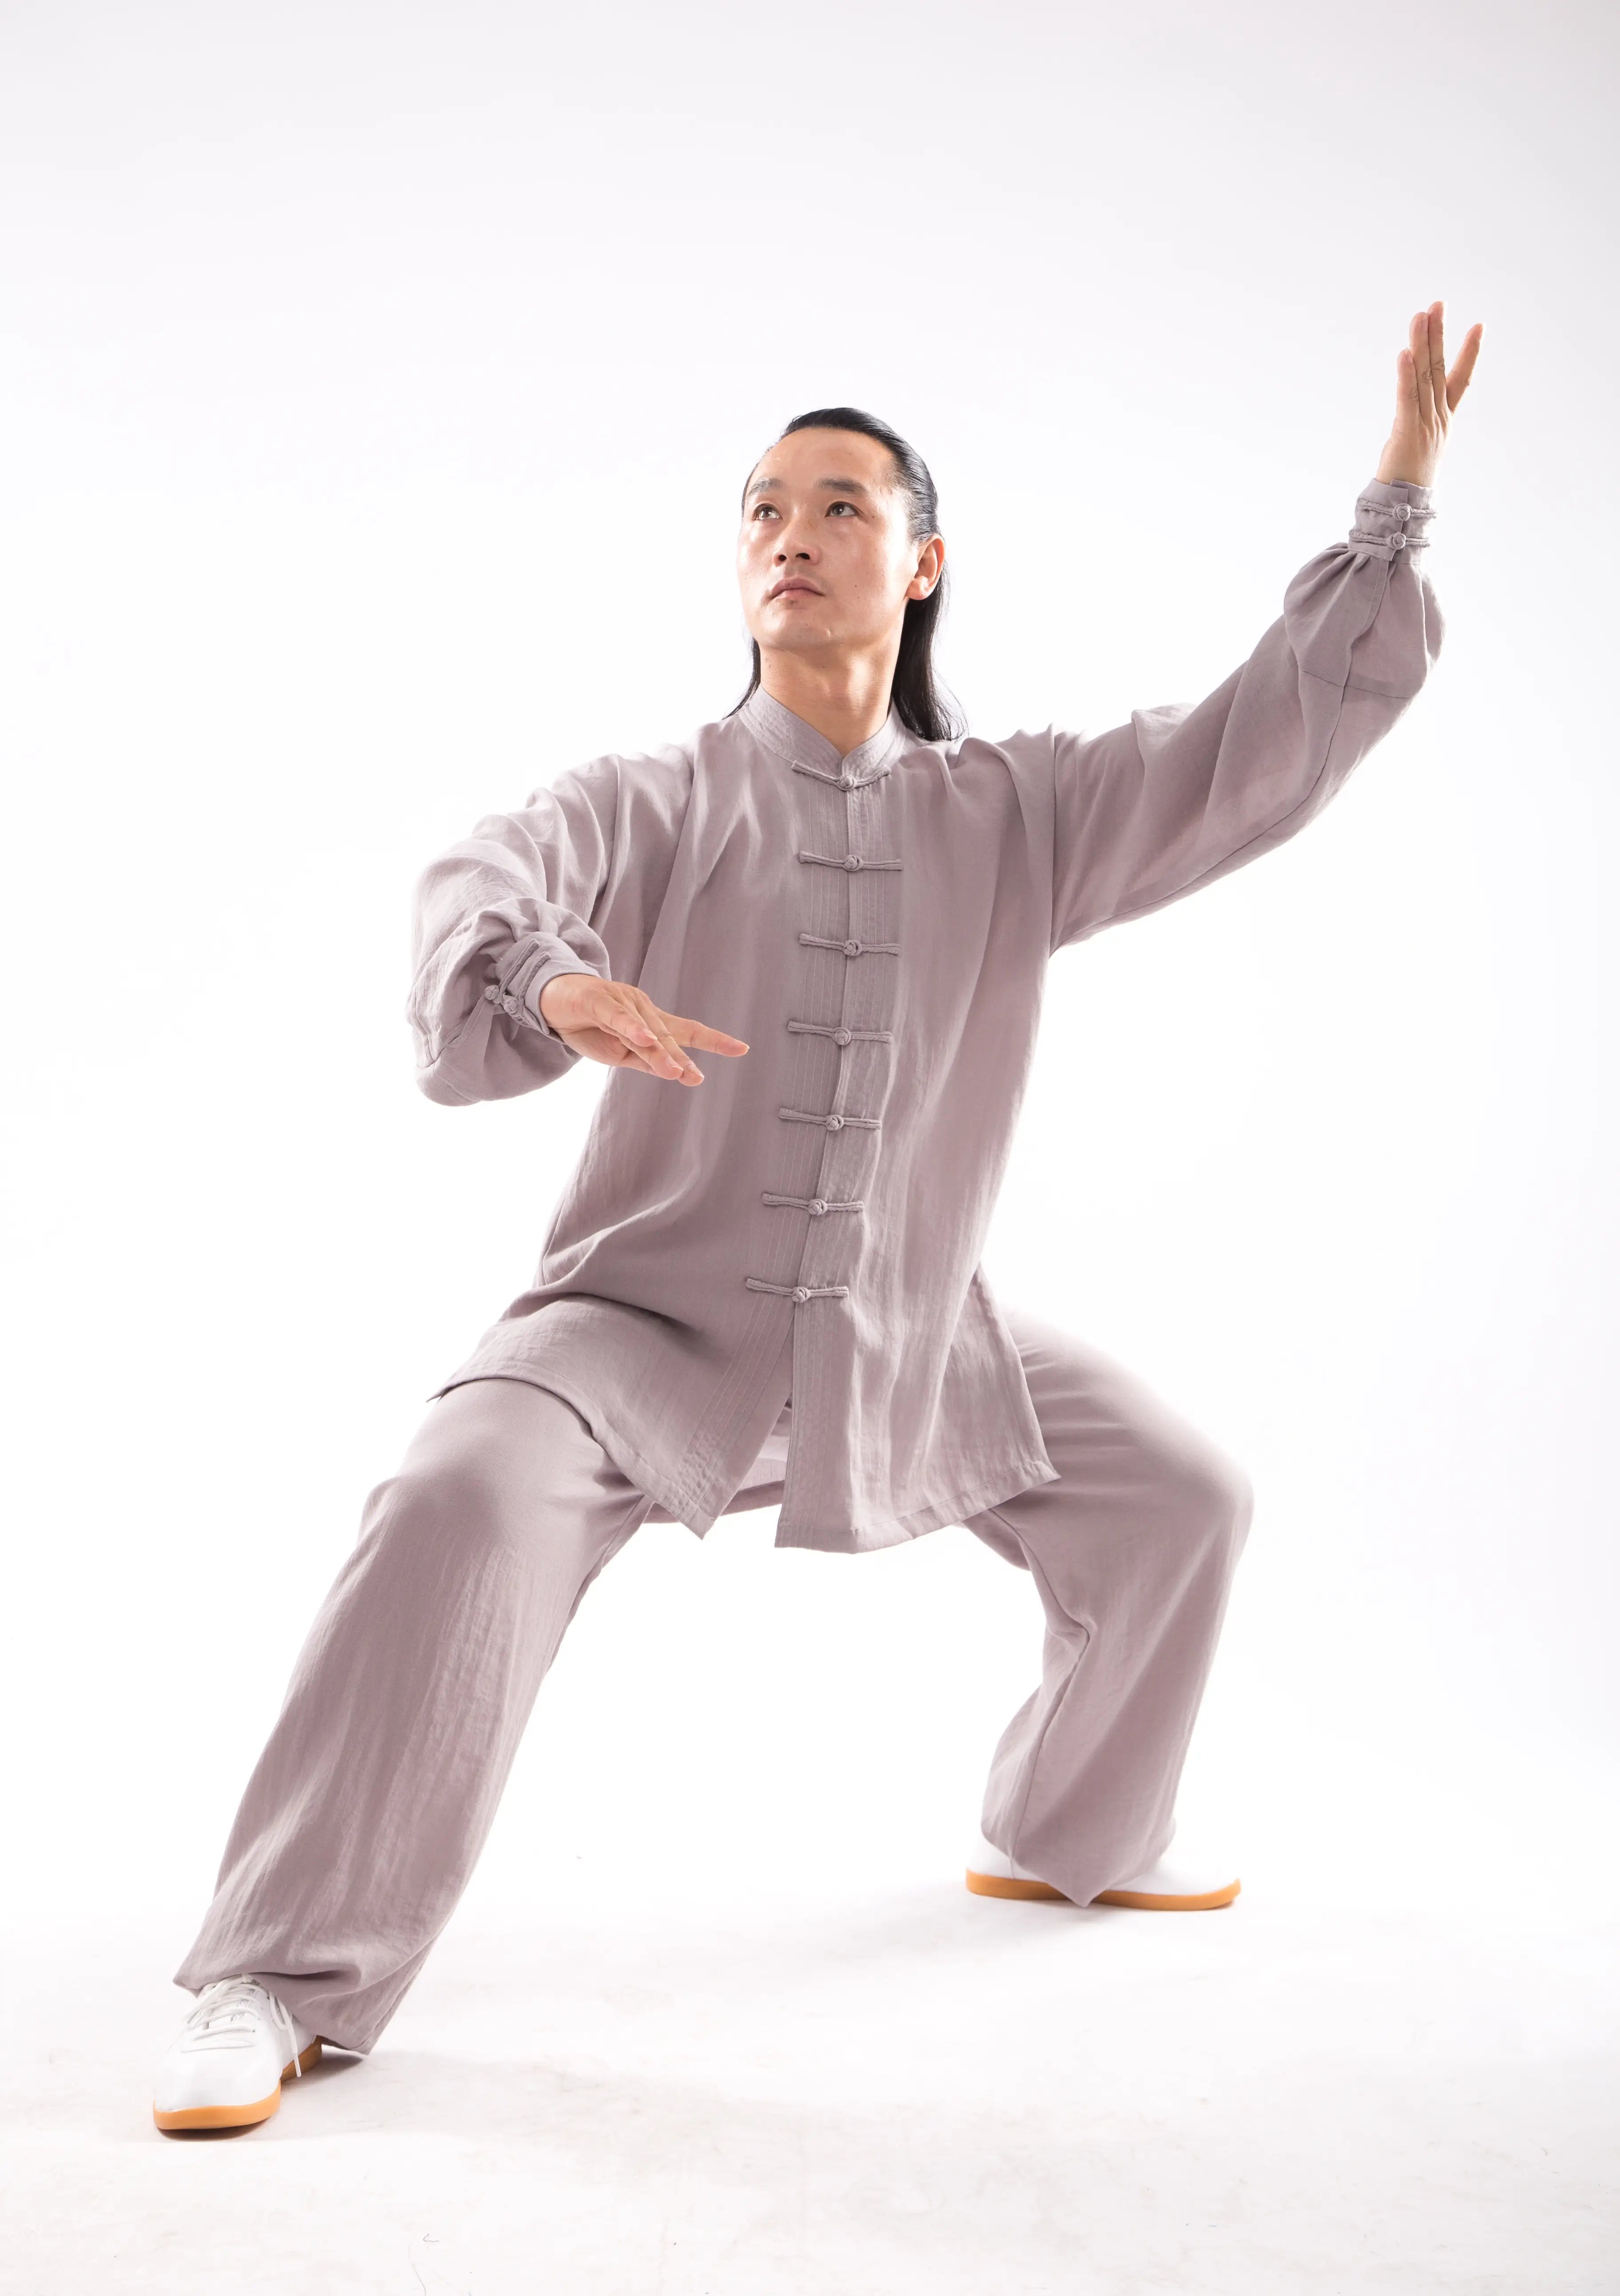 Wudang Mountain Wellness Tai Chi Hanfu: Unisex, 100% Natural Linen - Graceful Traditional Chinese Martial Arts Attire